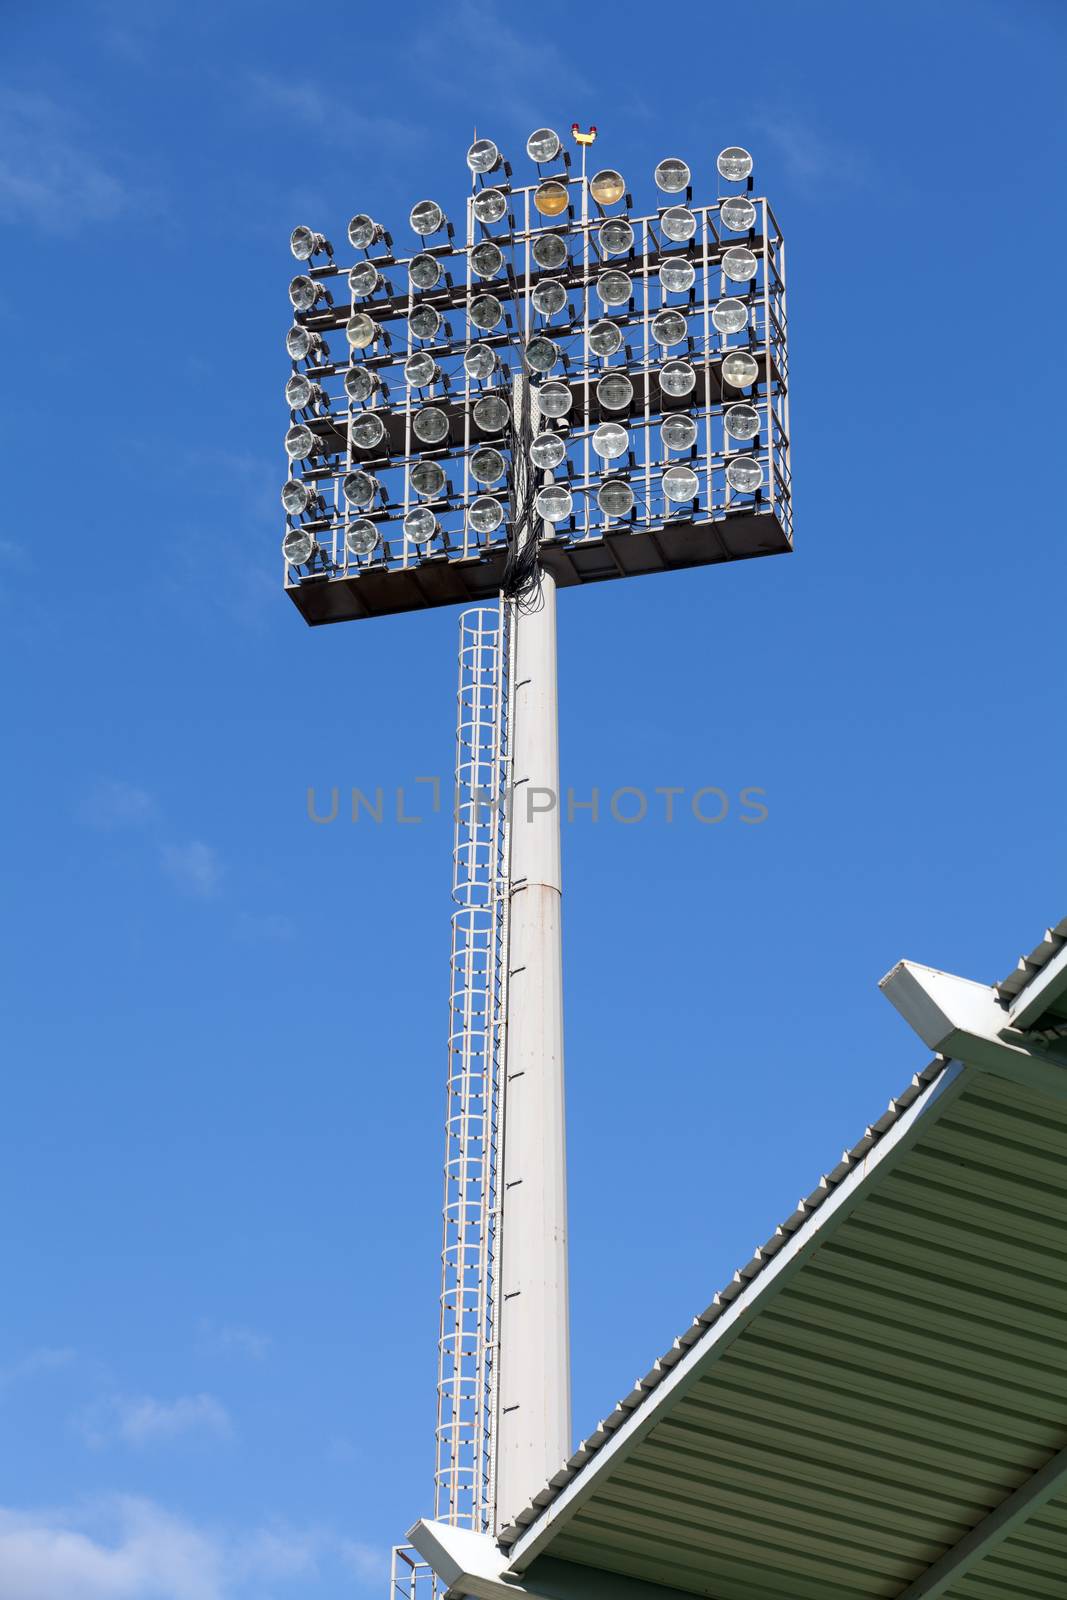 Stadium lights against blue sky background